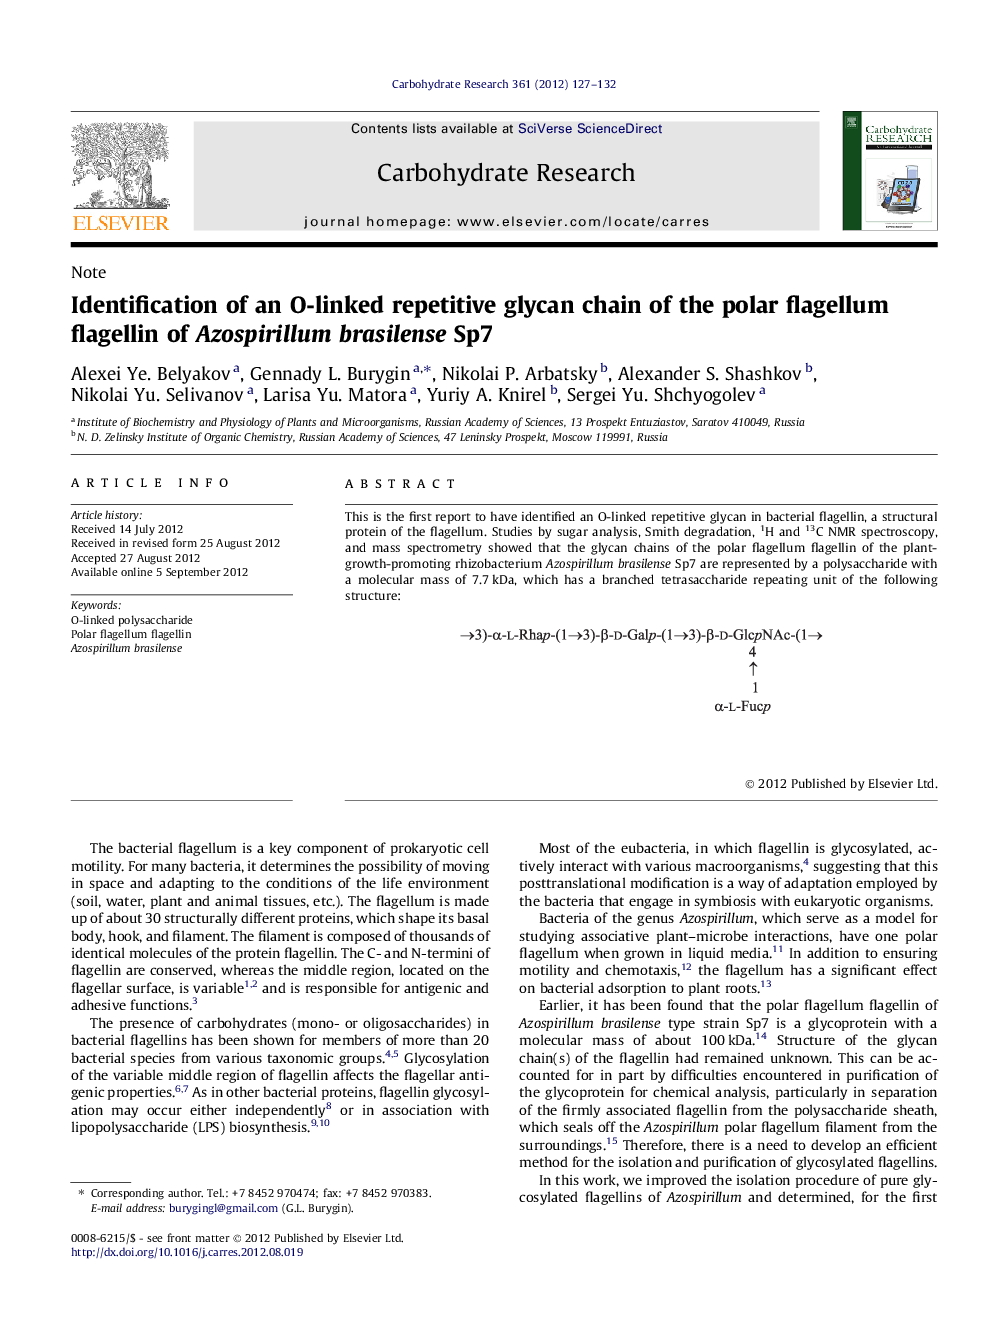 Identification of an O-linked repetitive glycan chain of the polar flagellum flagellin of Azospirillum brasilense Sp7